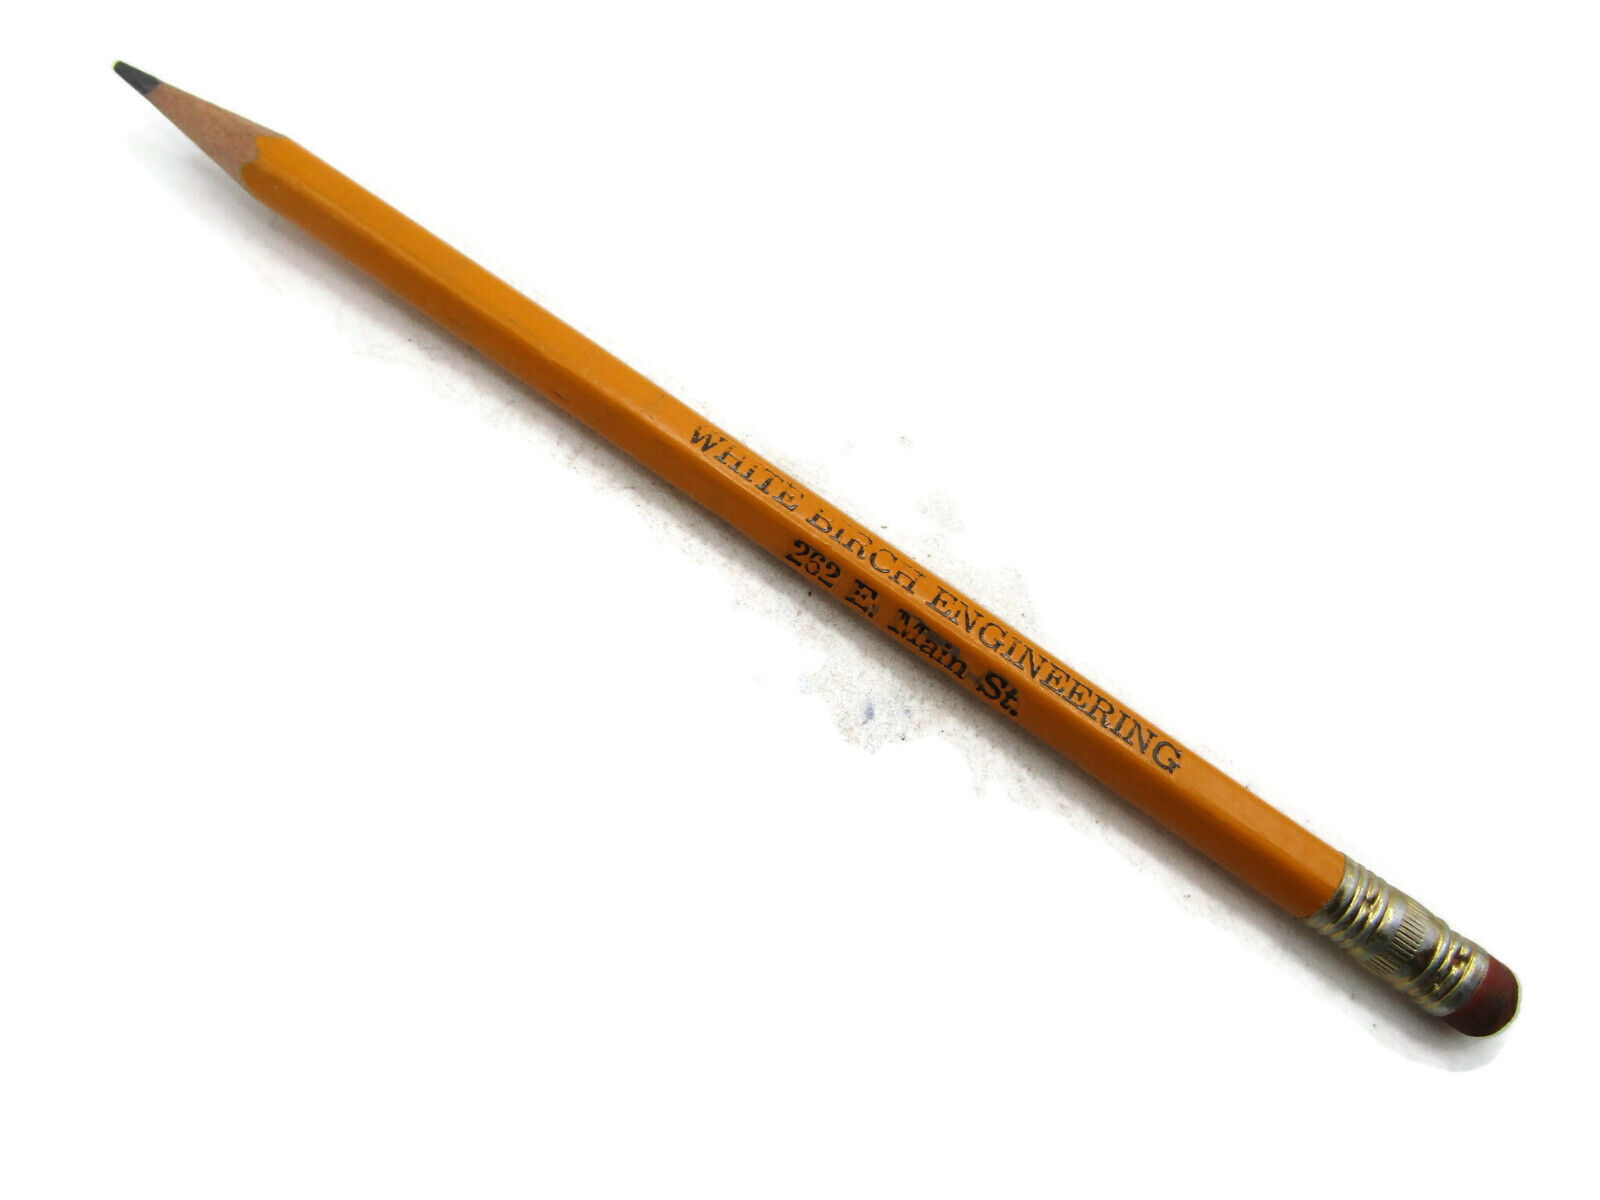 White Birch Engineering Pencil Hummelstown, PA